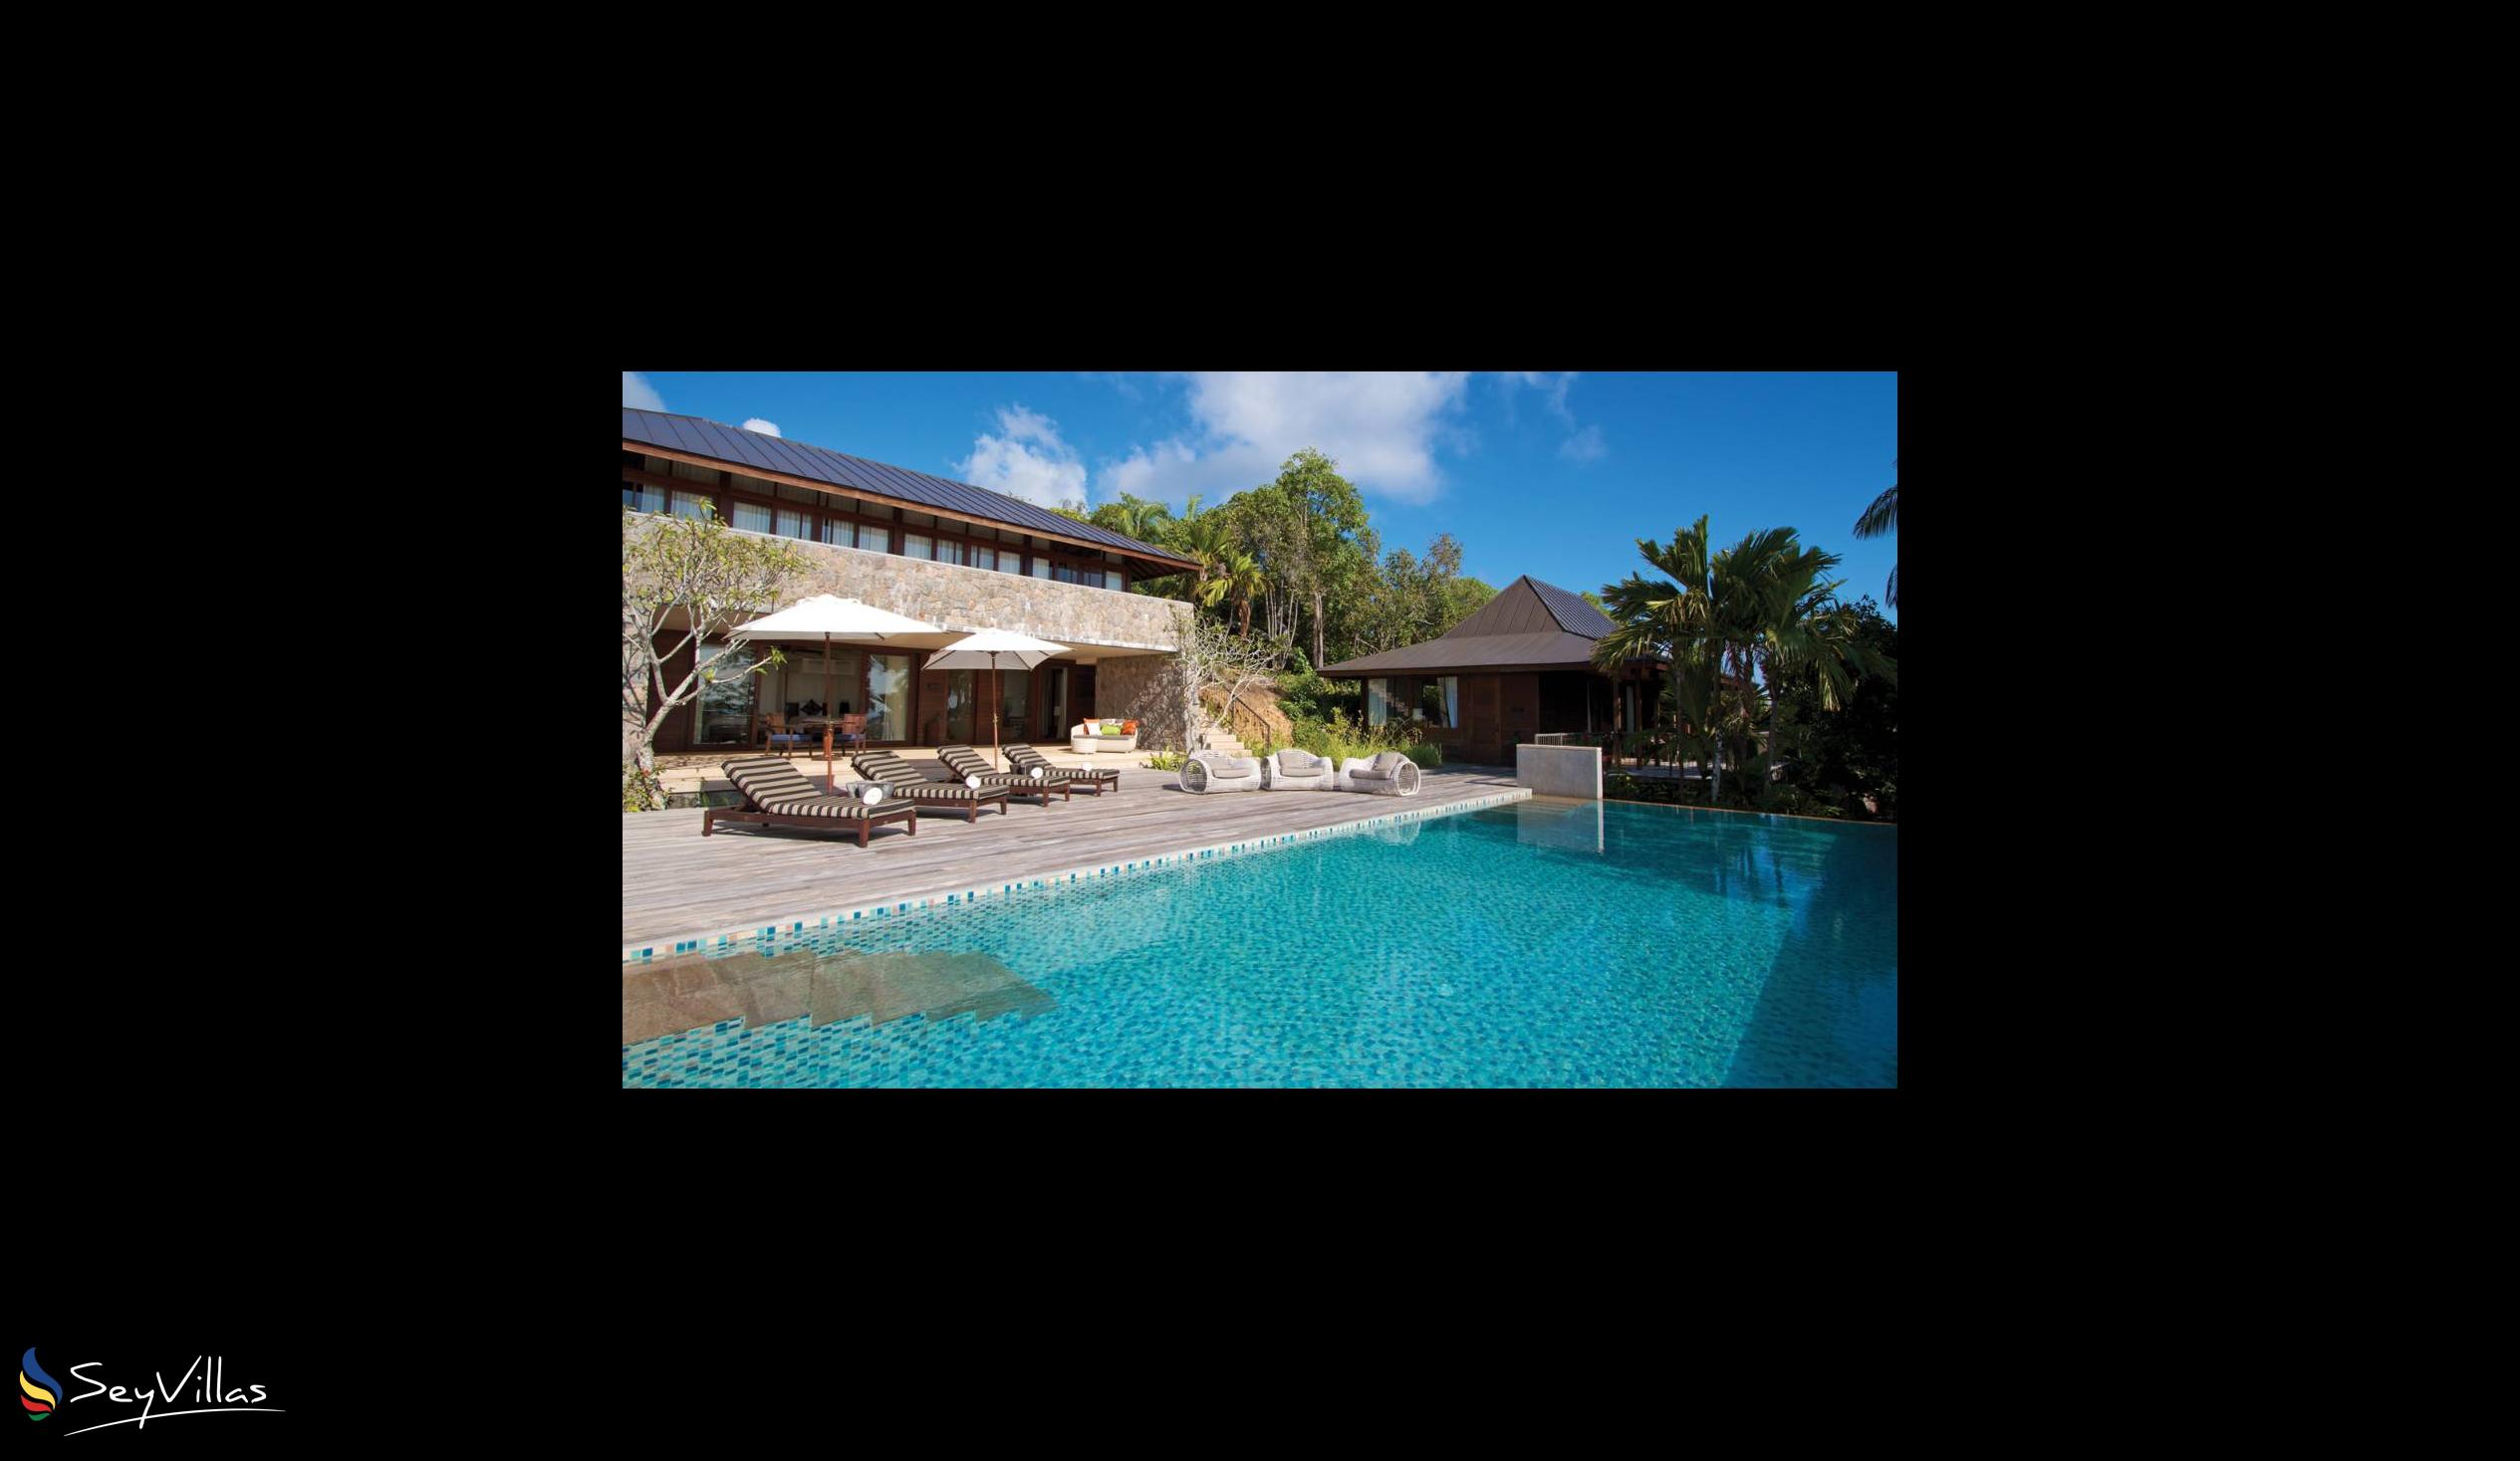 Photo 62: Four Seasons Resort - 3-Bedroom Residence Villa - Mahé (Seychelles)